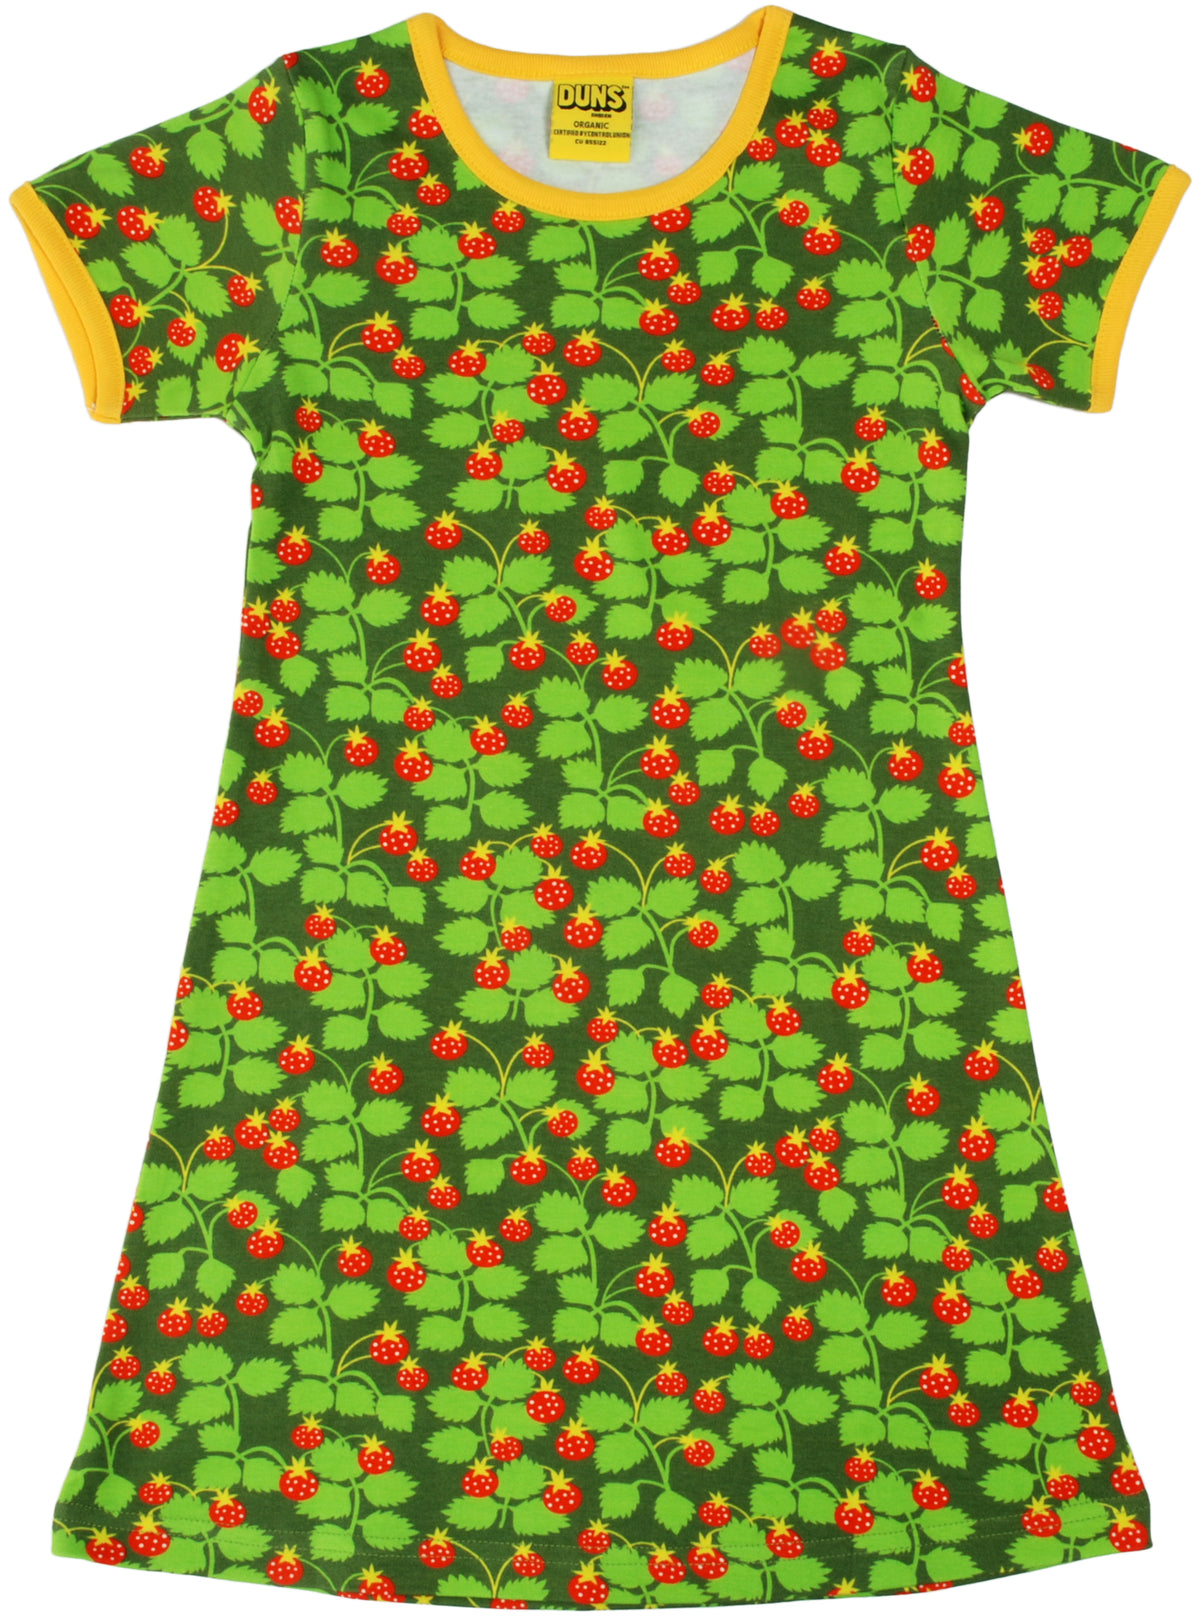 Duns Sweden - Short Sleeve Dress Strawberry